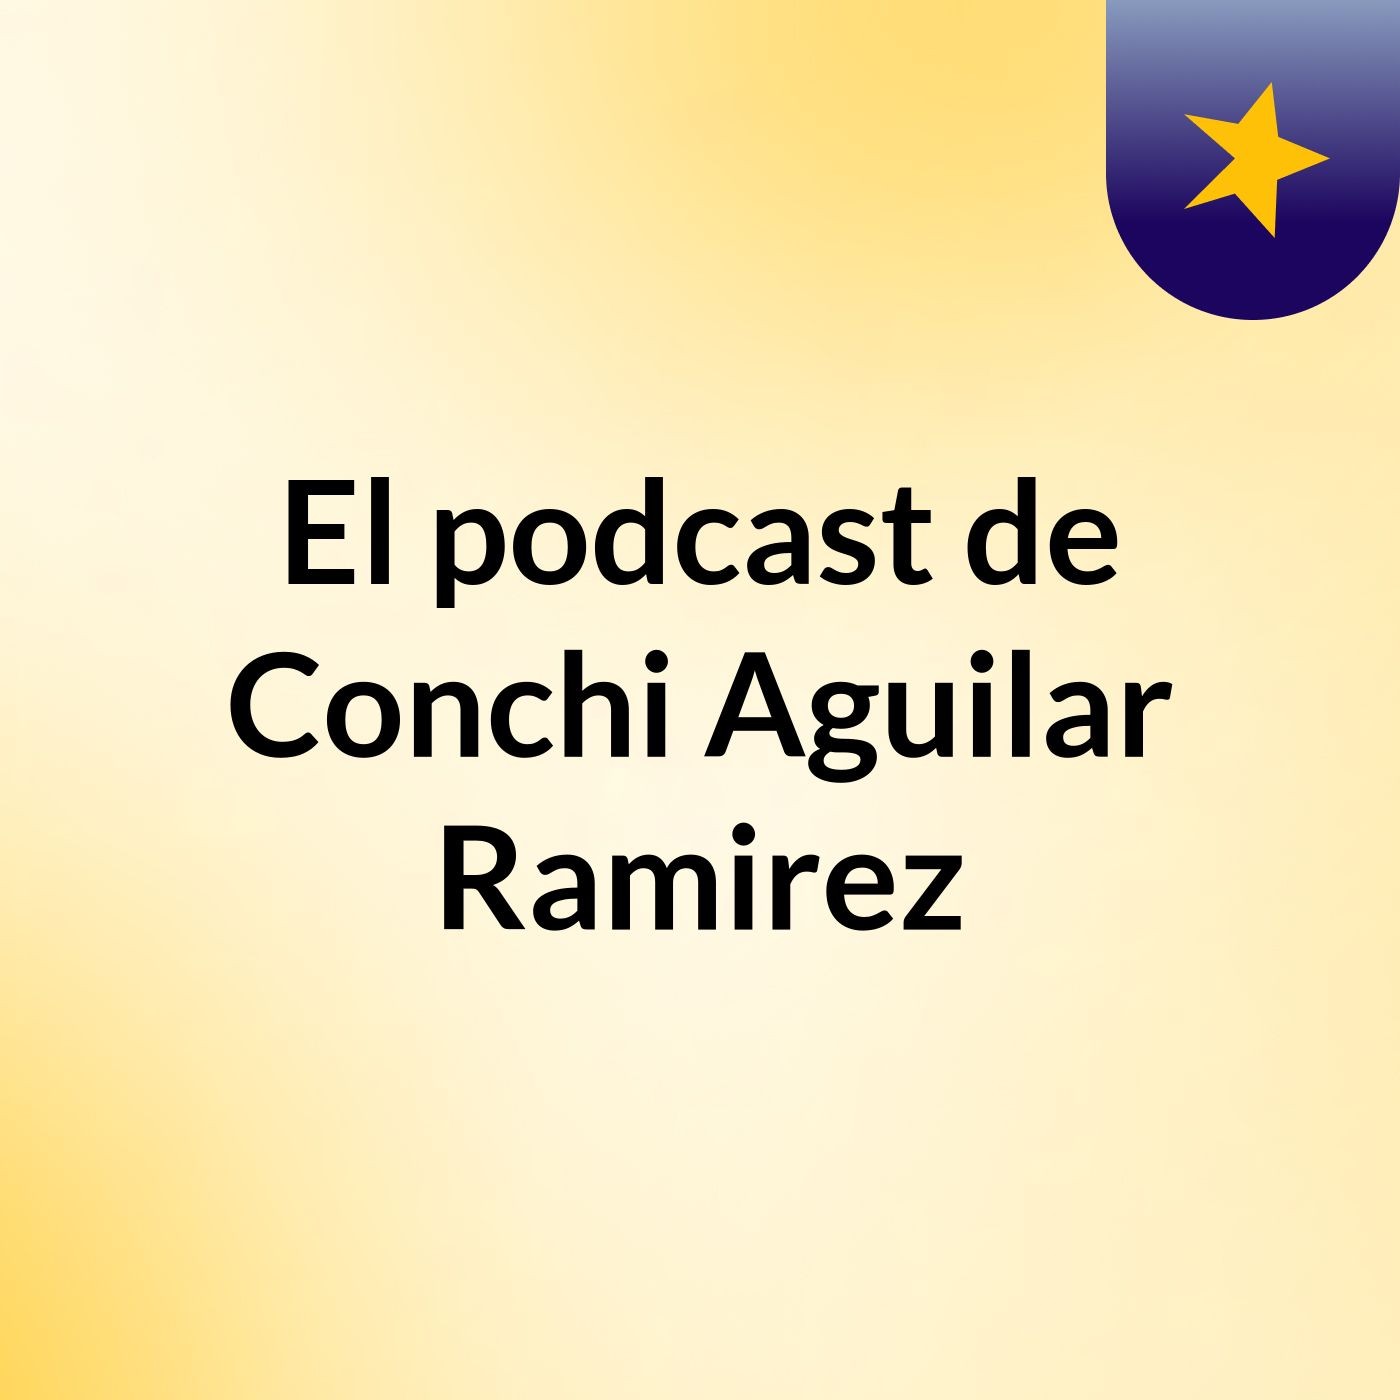 El podcast de Conchi Aguilar Ramirez